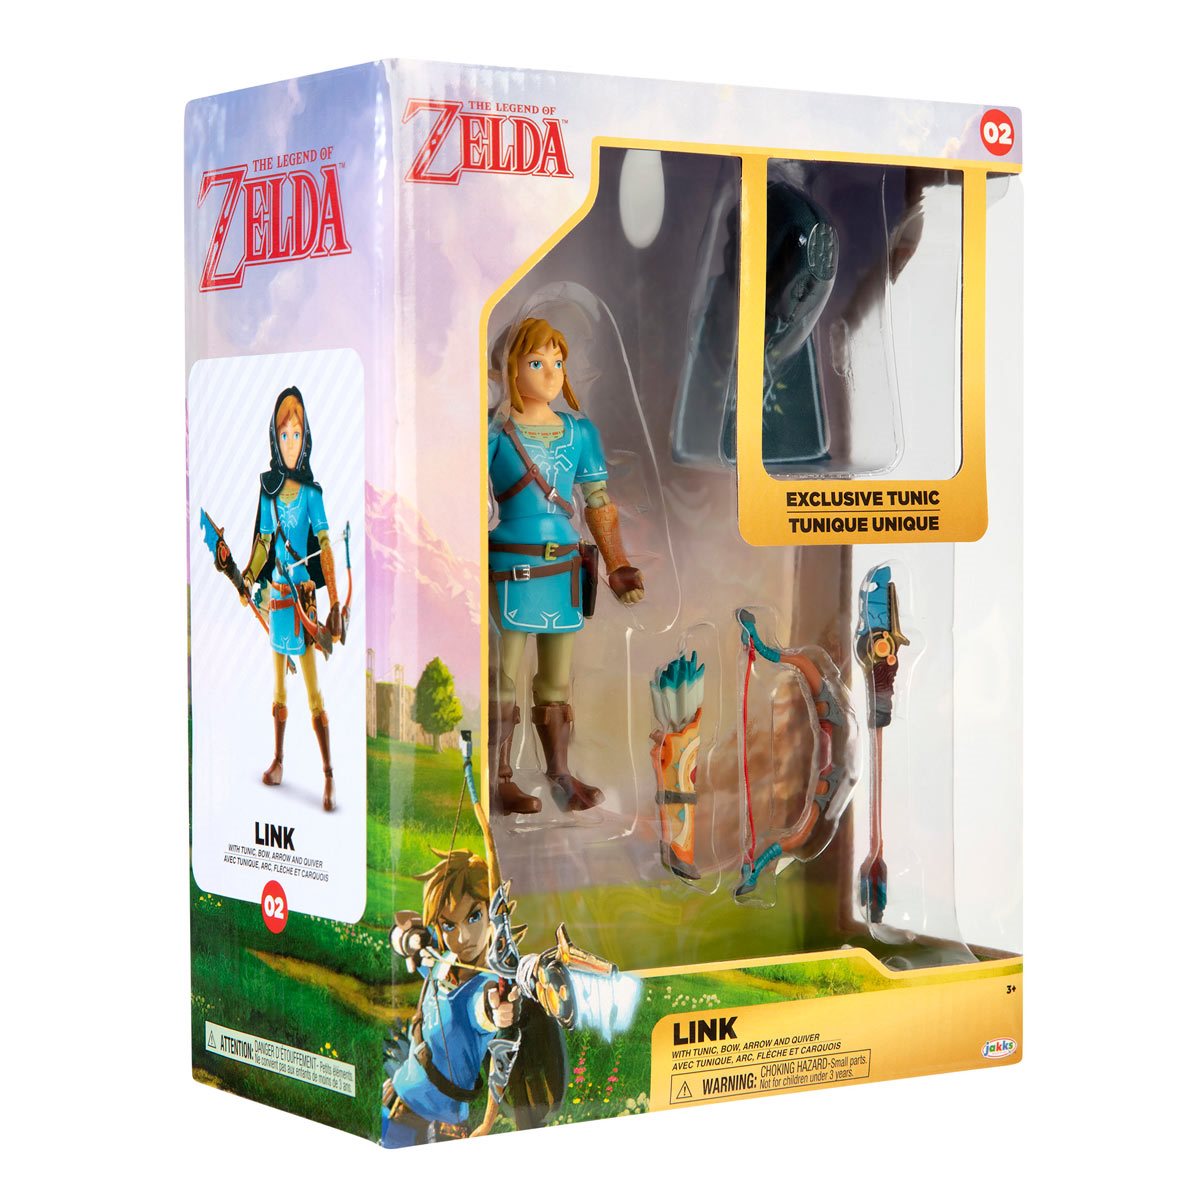 Jakks World Of Nintendo The Legend Of Zelda Action Figures - Link & Tetra  Toys